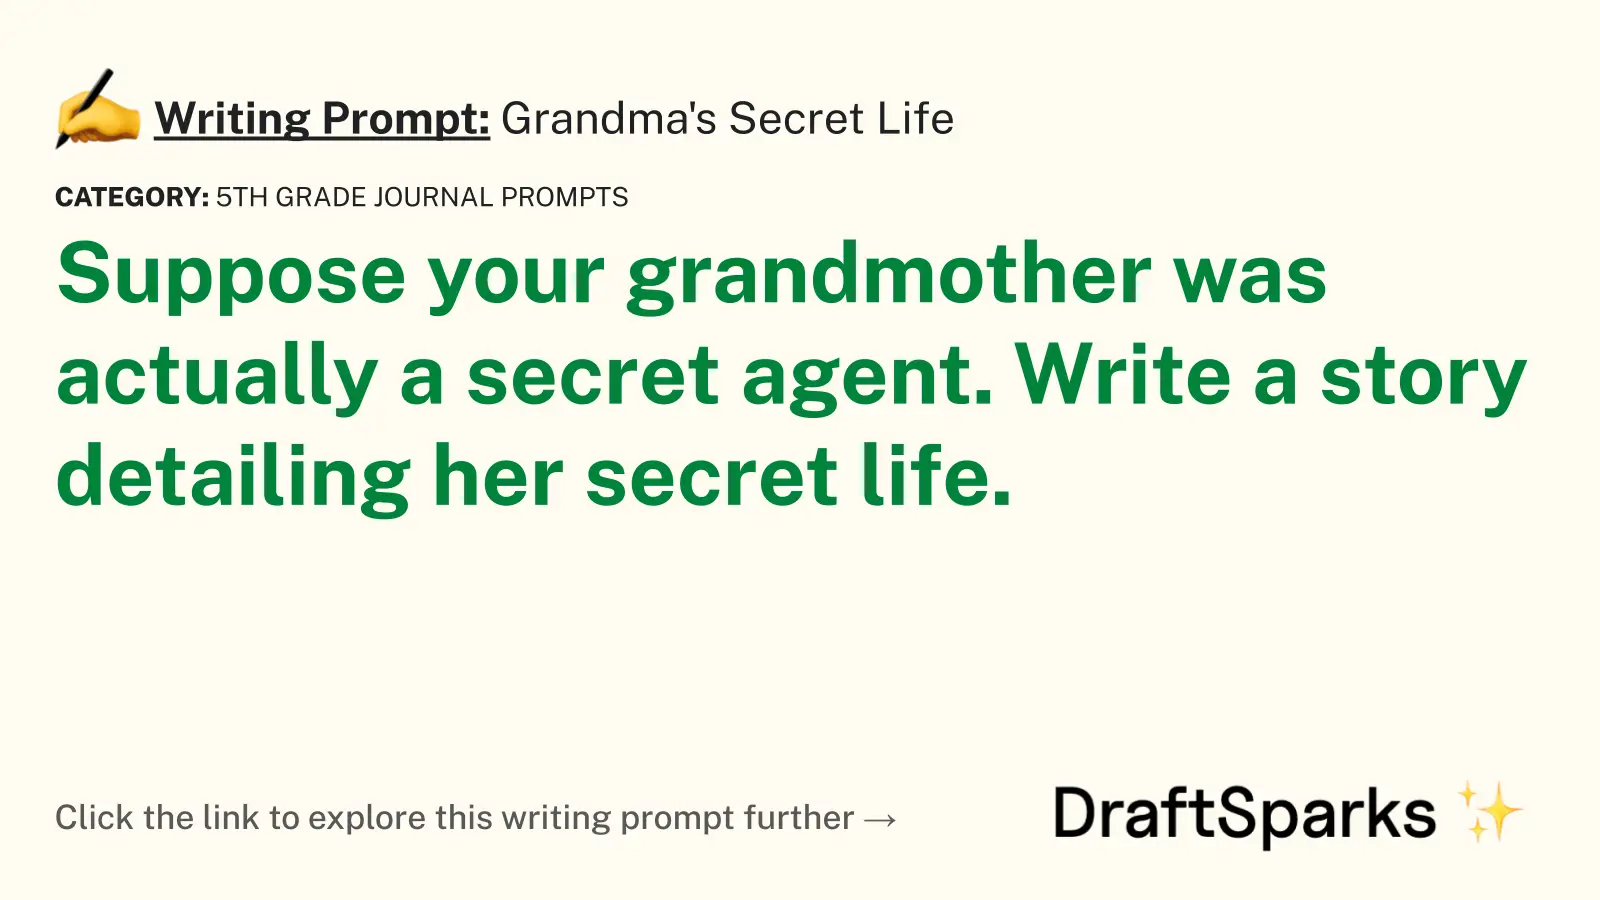 Grandma’s Secret Life